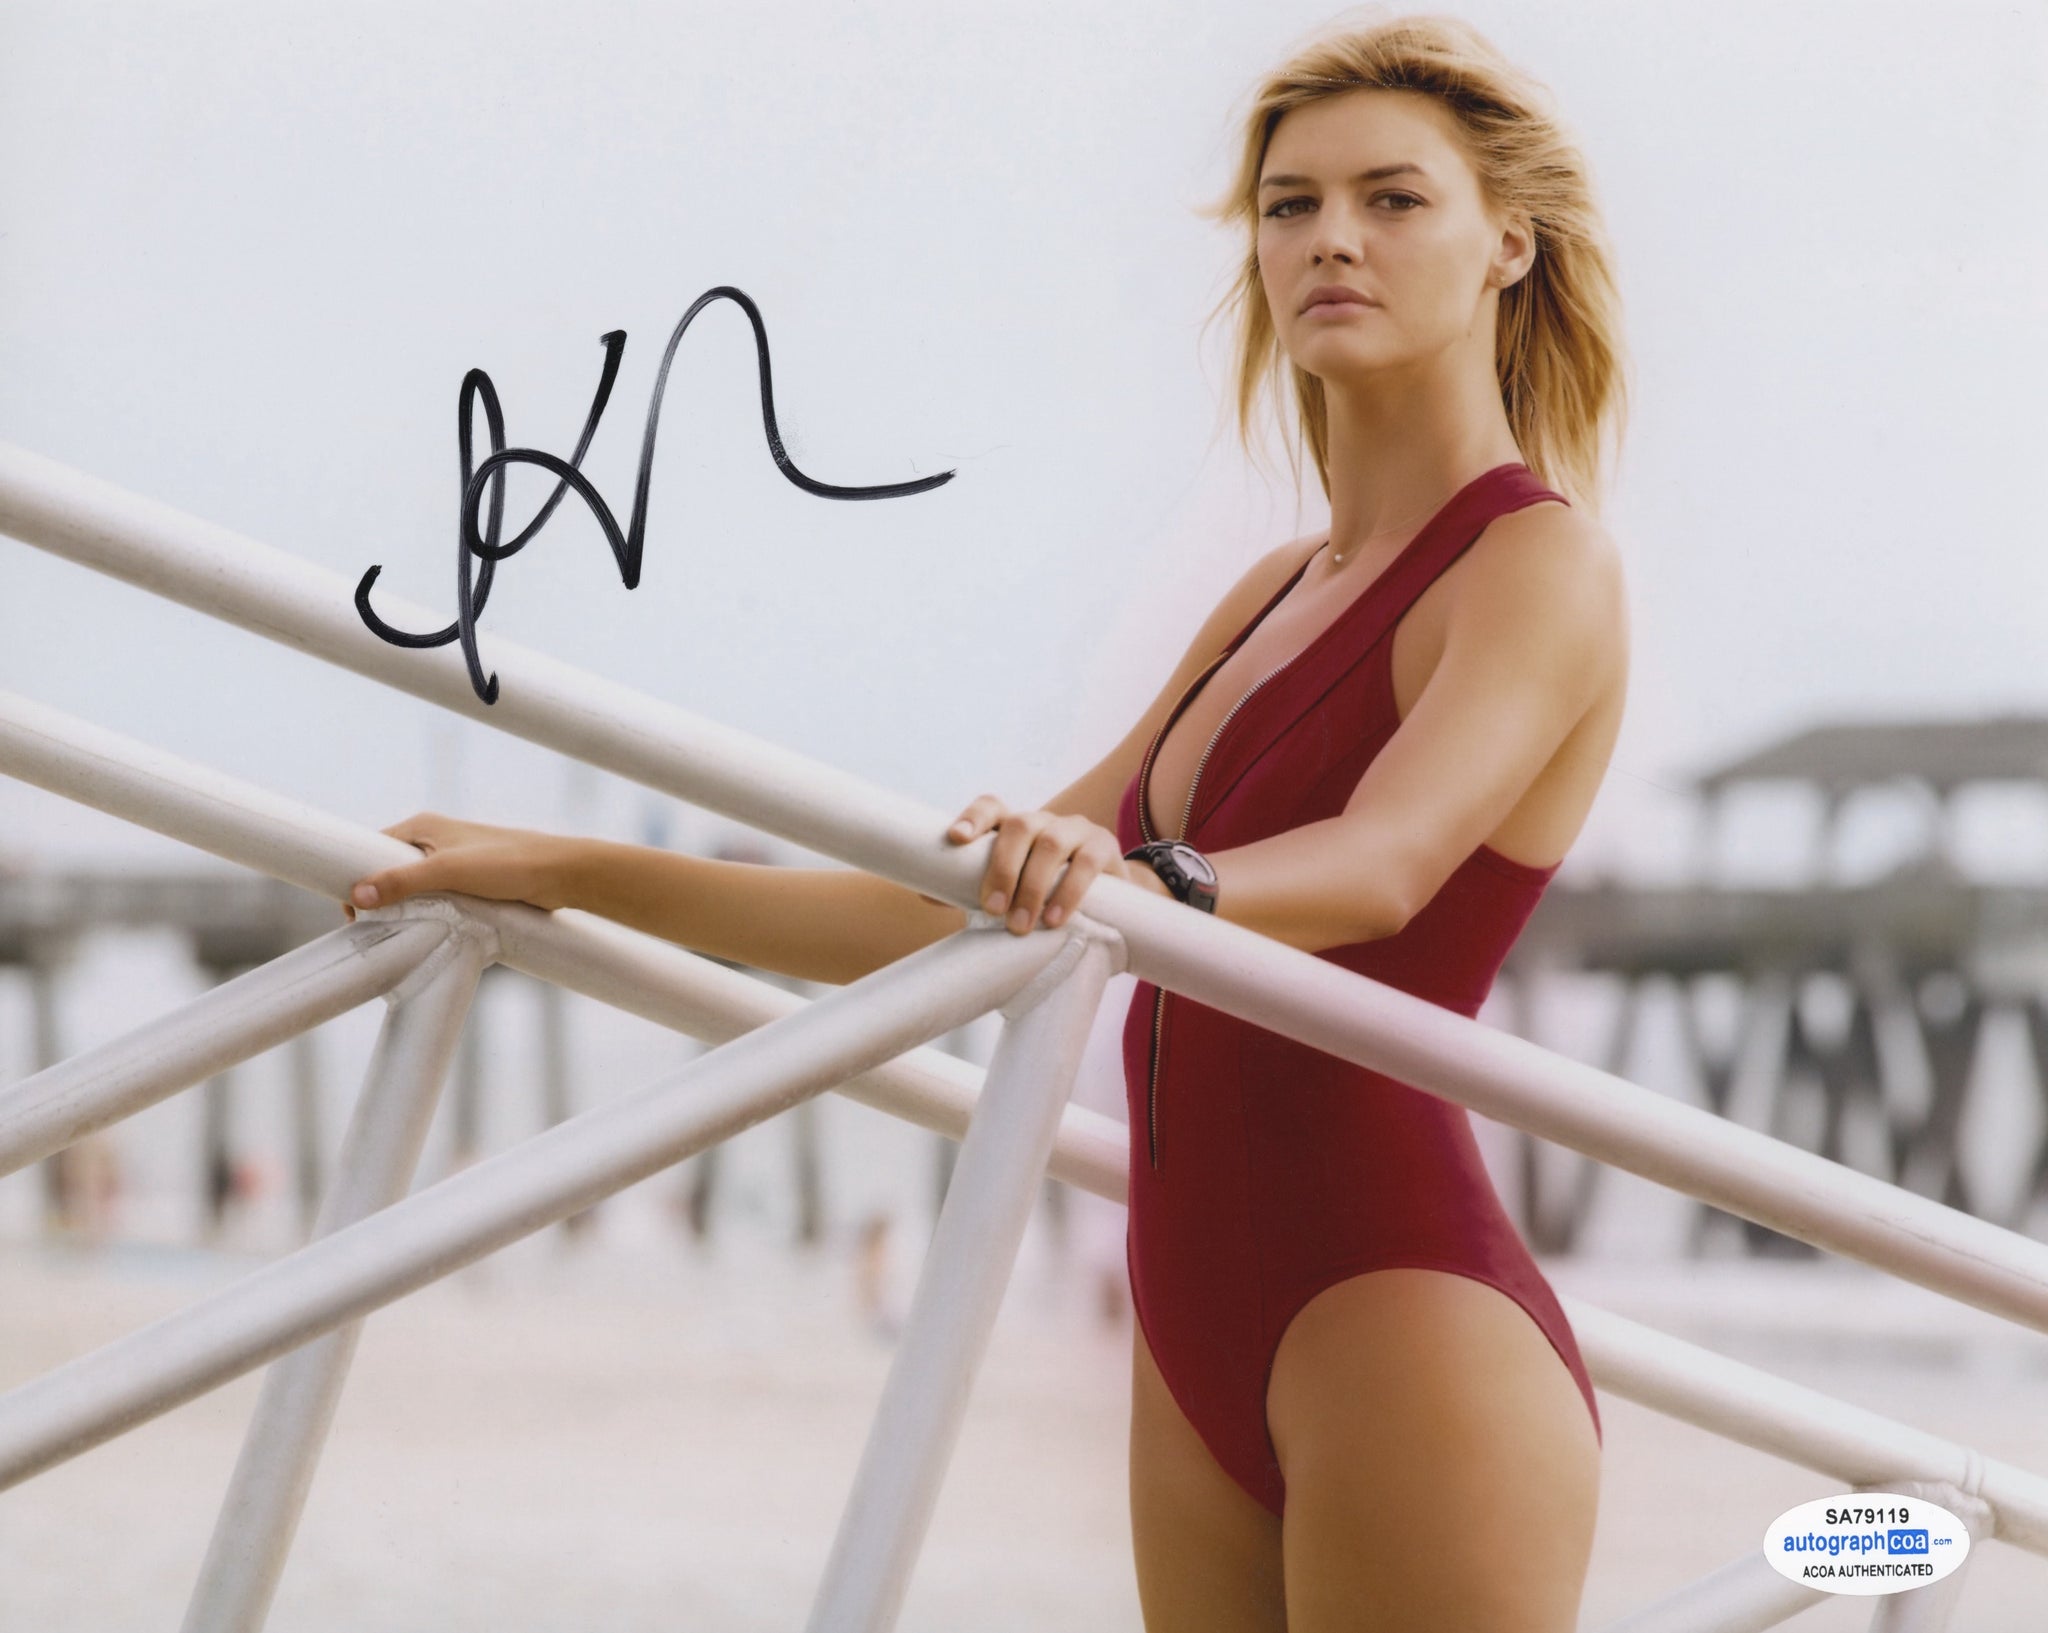 Kelly Rohrbach Baywatch Signed Autograph 8x10 Photo ACOA